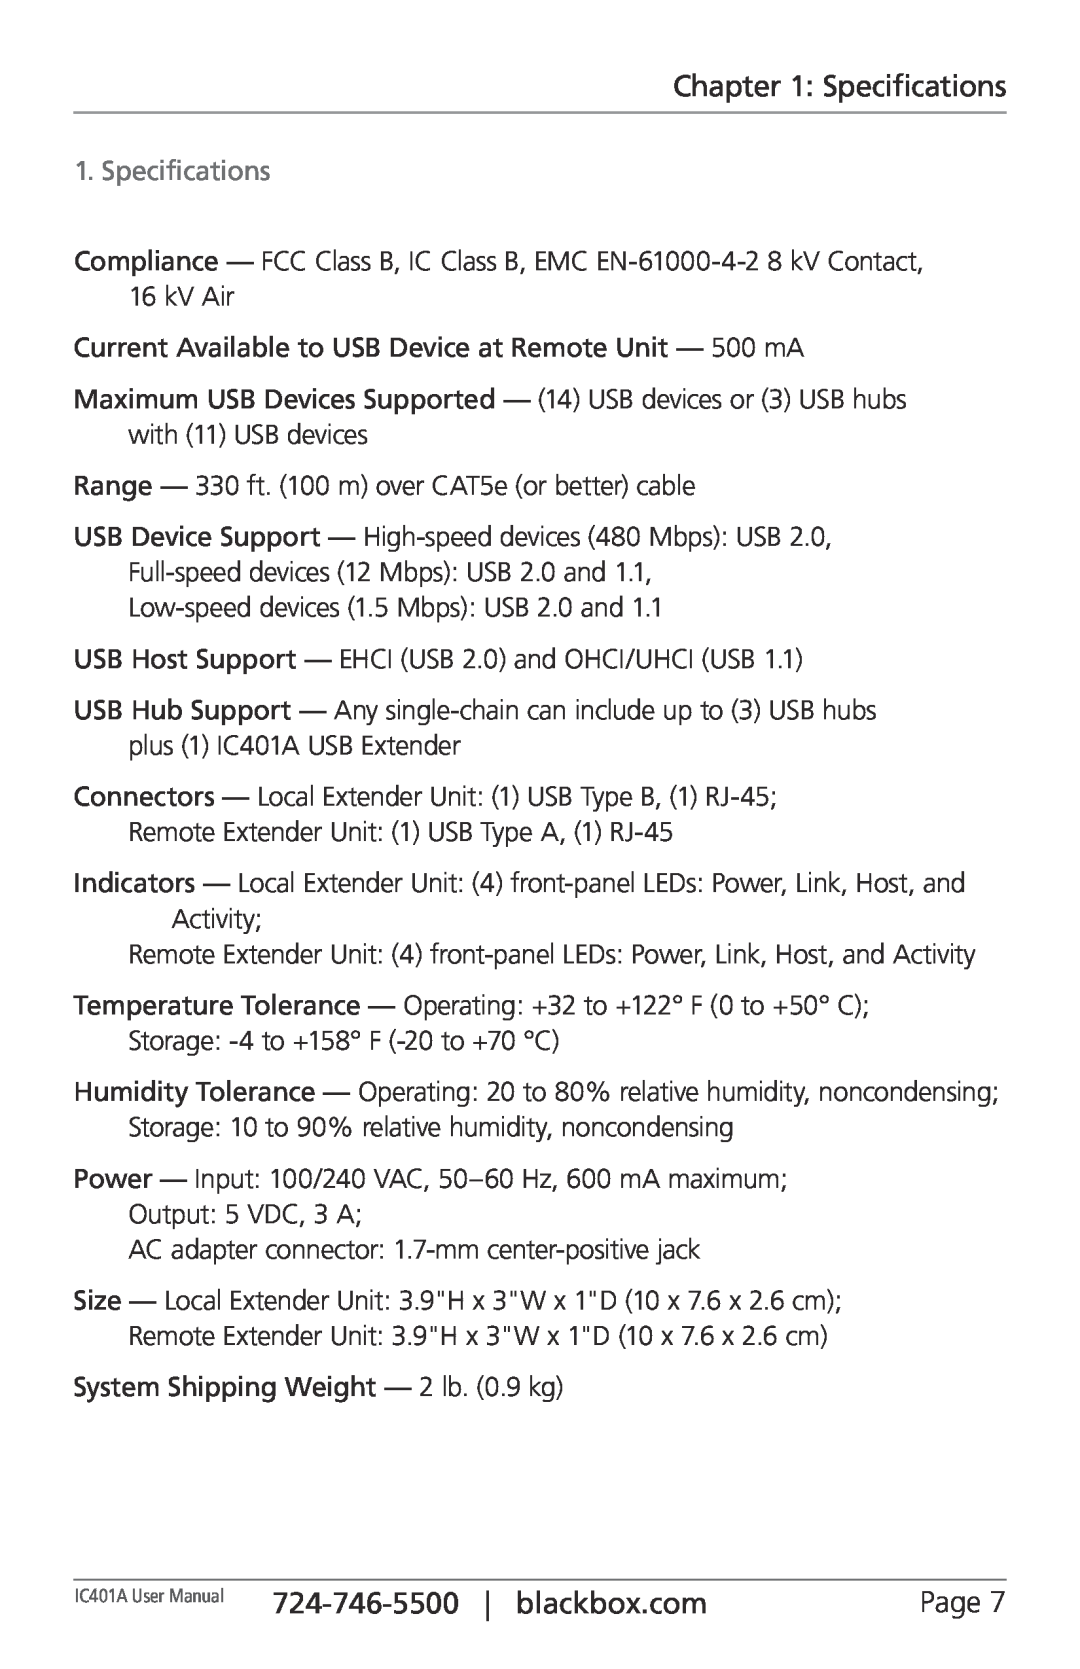 Black Box 1-Port CAT5 USB 2.0 Extender User Manua, IC401A user manual Specifications, blackbox.com 